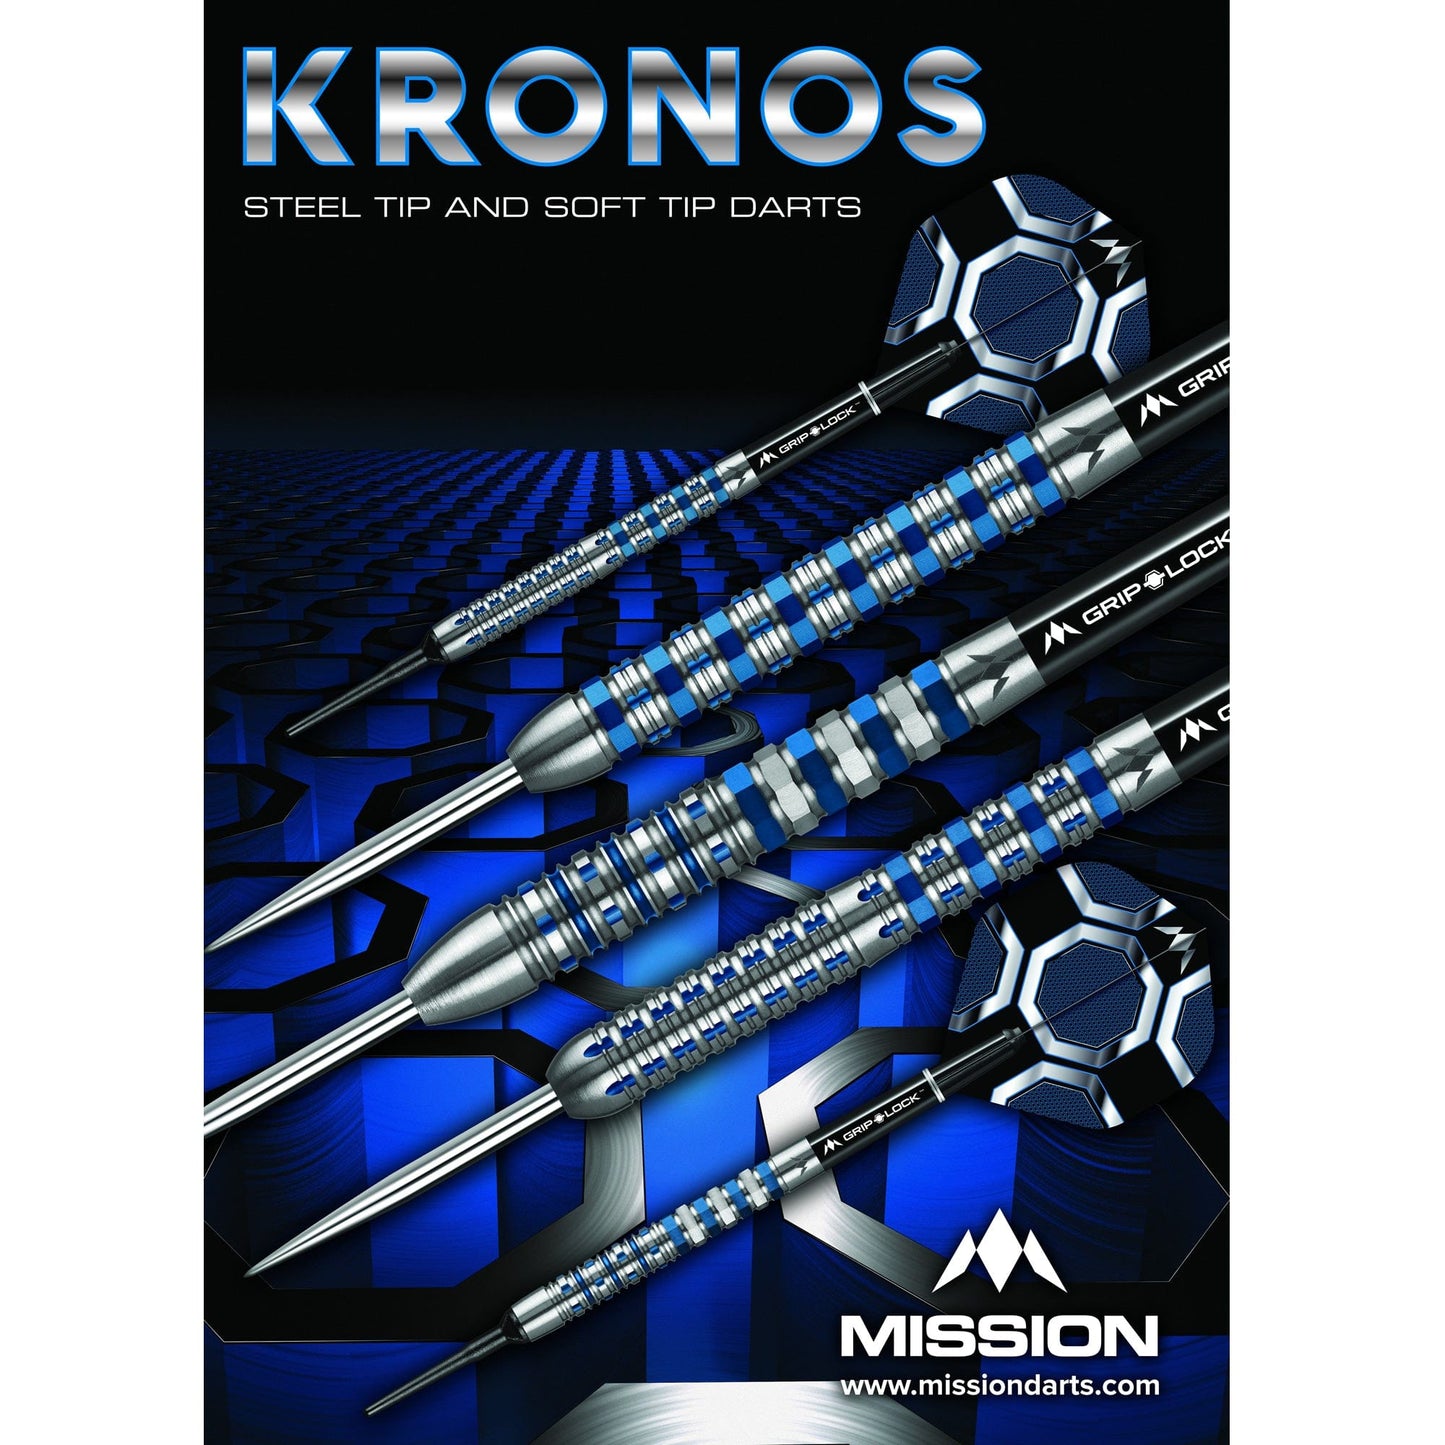 *Mission Darts - Poster - A3 - 420mm x 297mm - Kronos